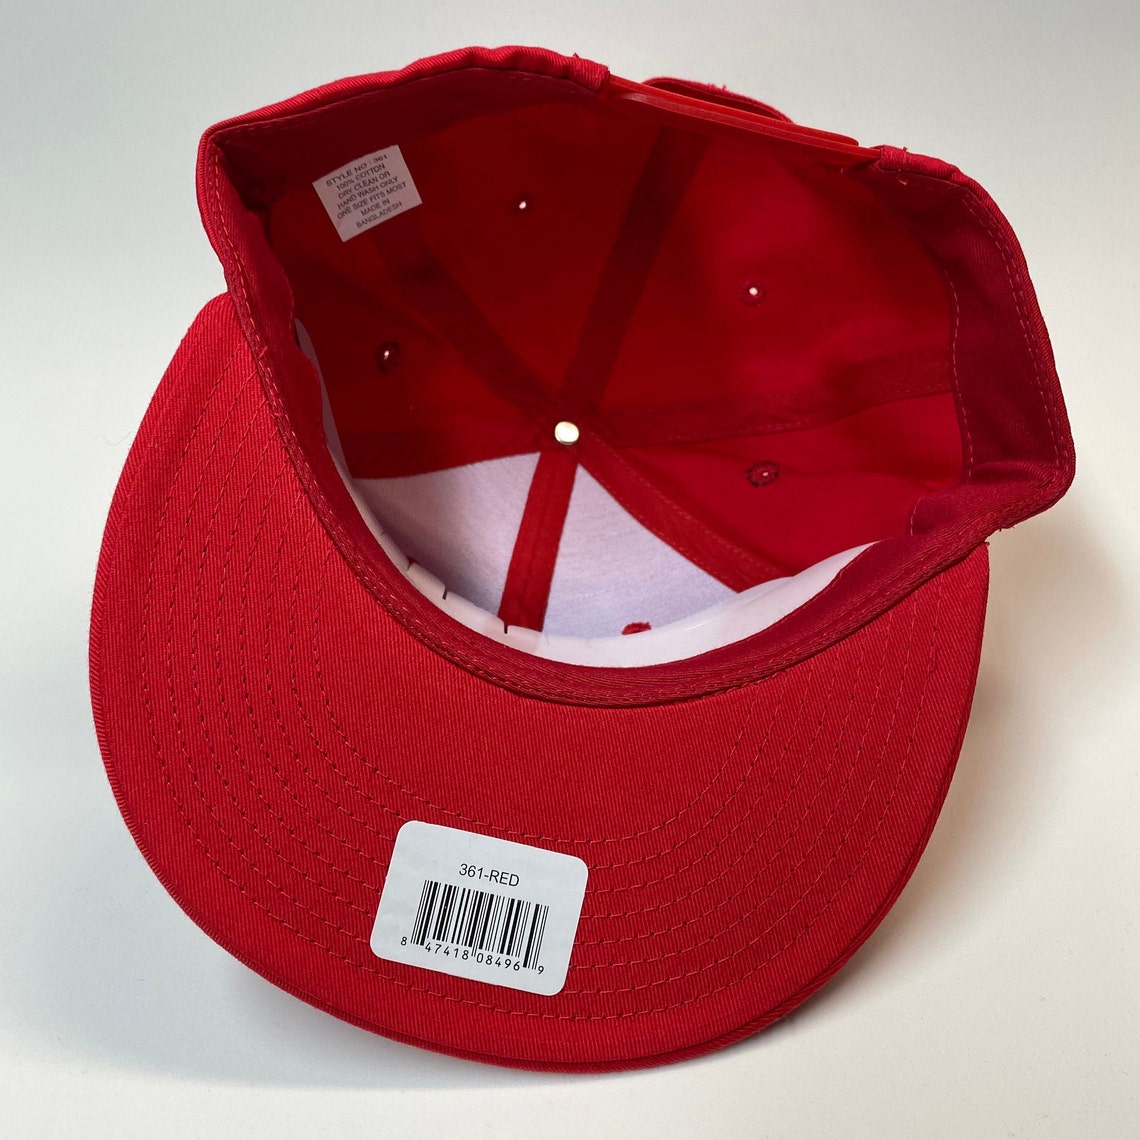 LA Los Angeles upside down cap Red baseball cap think blue | Etsy